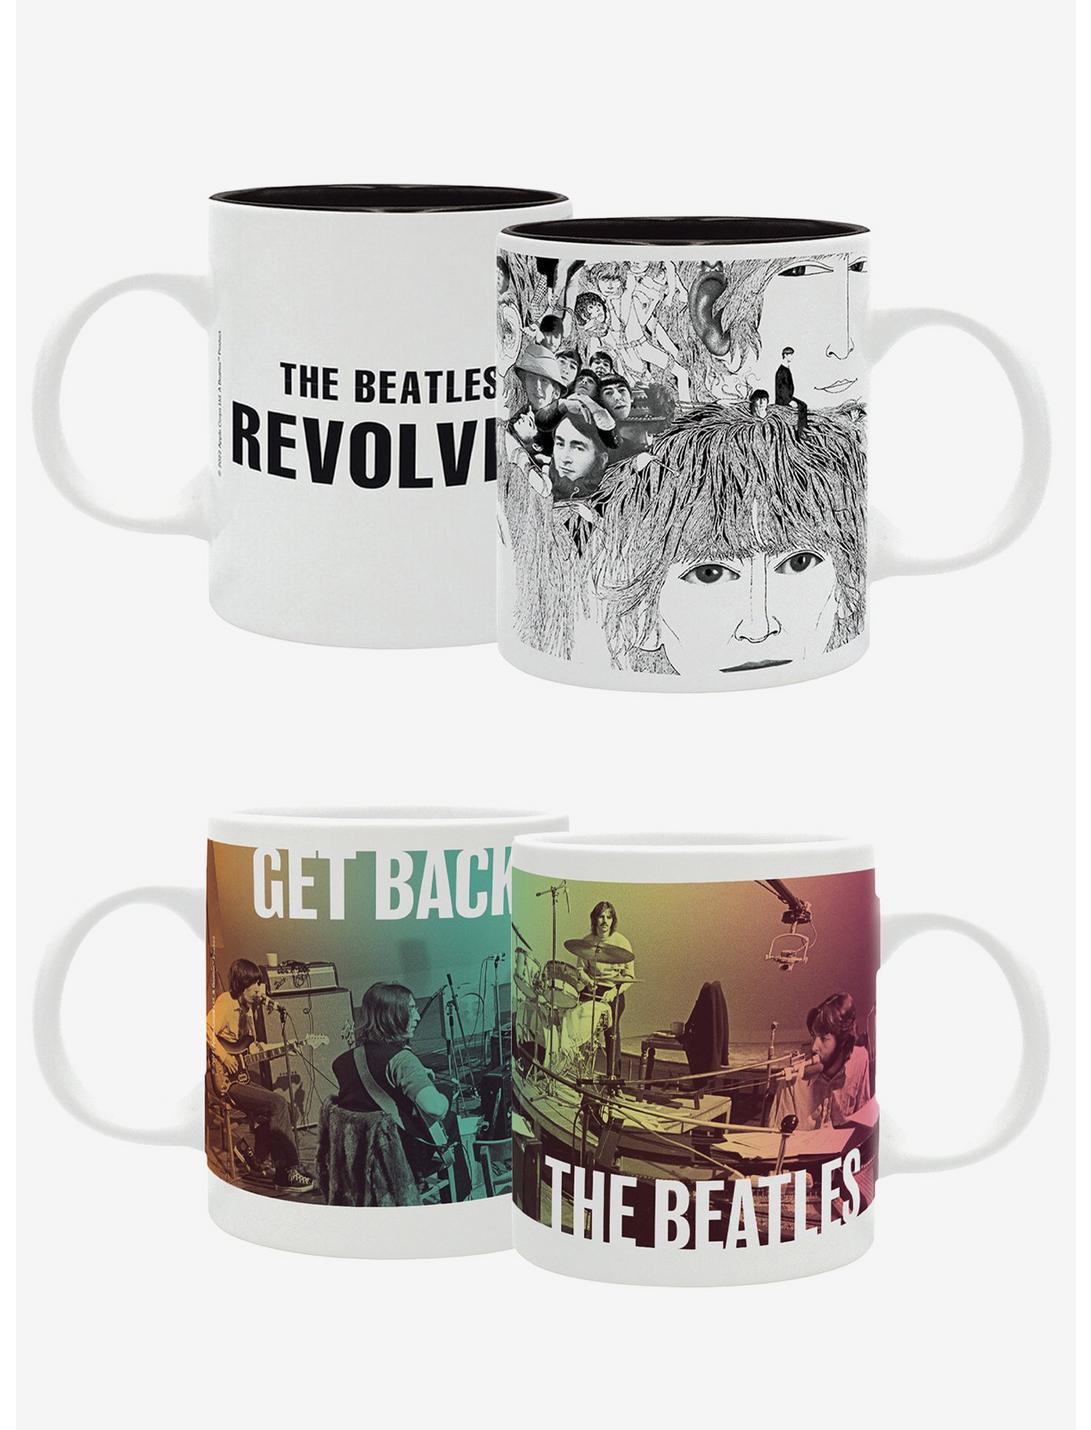 The Beatles Mug Set Includes Revolver Mug | BoxLunch